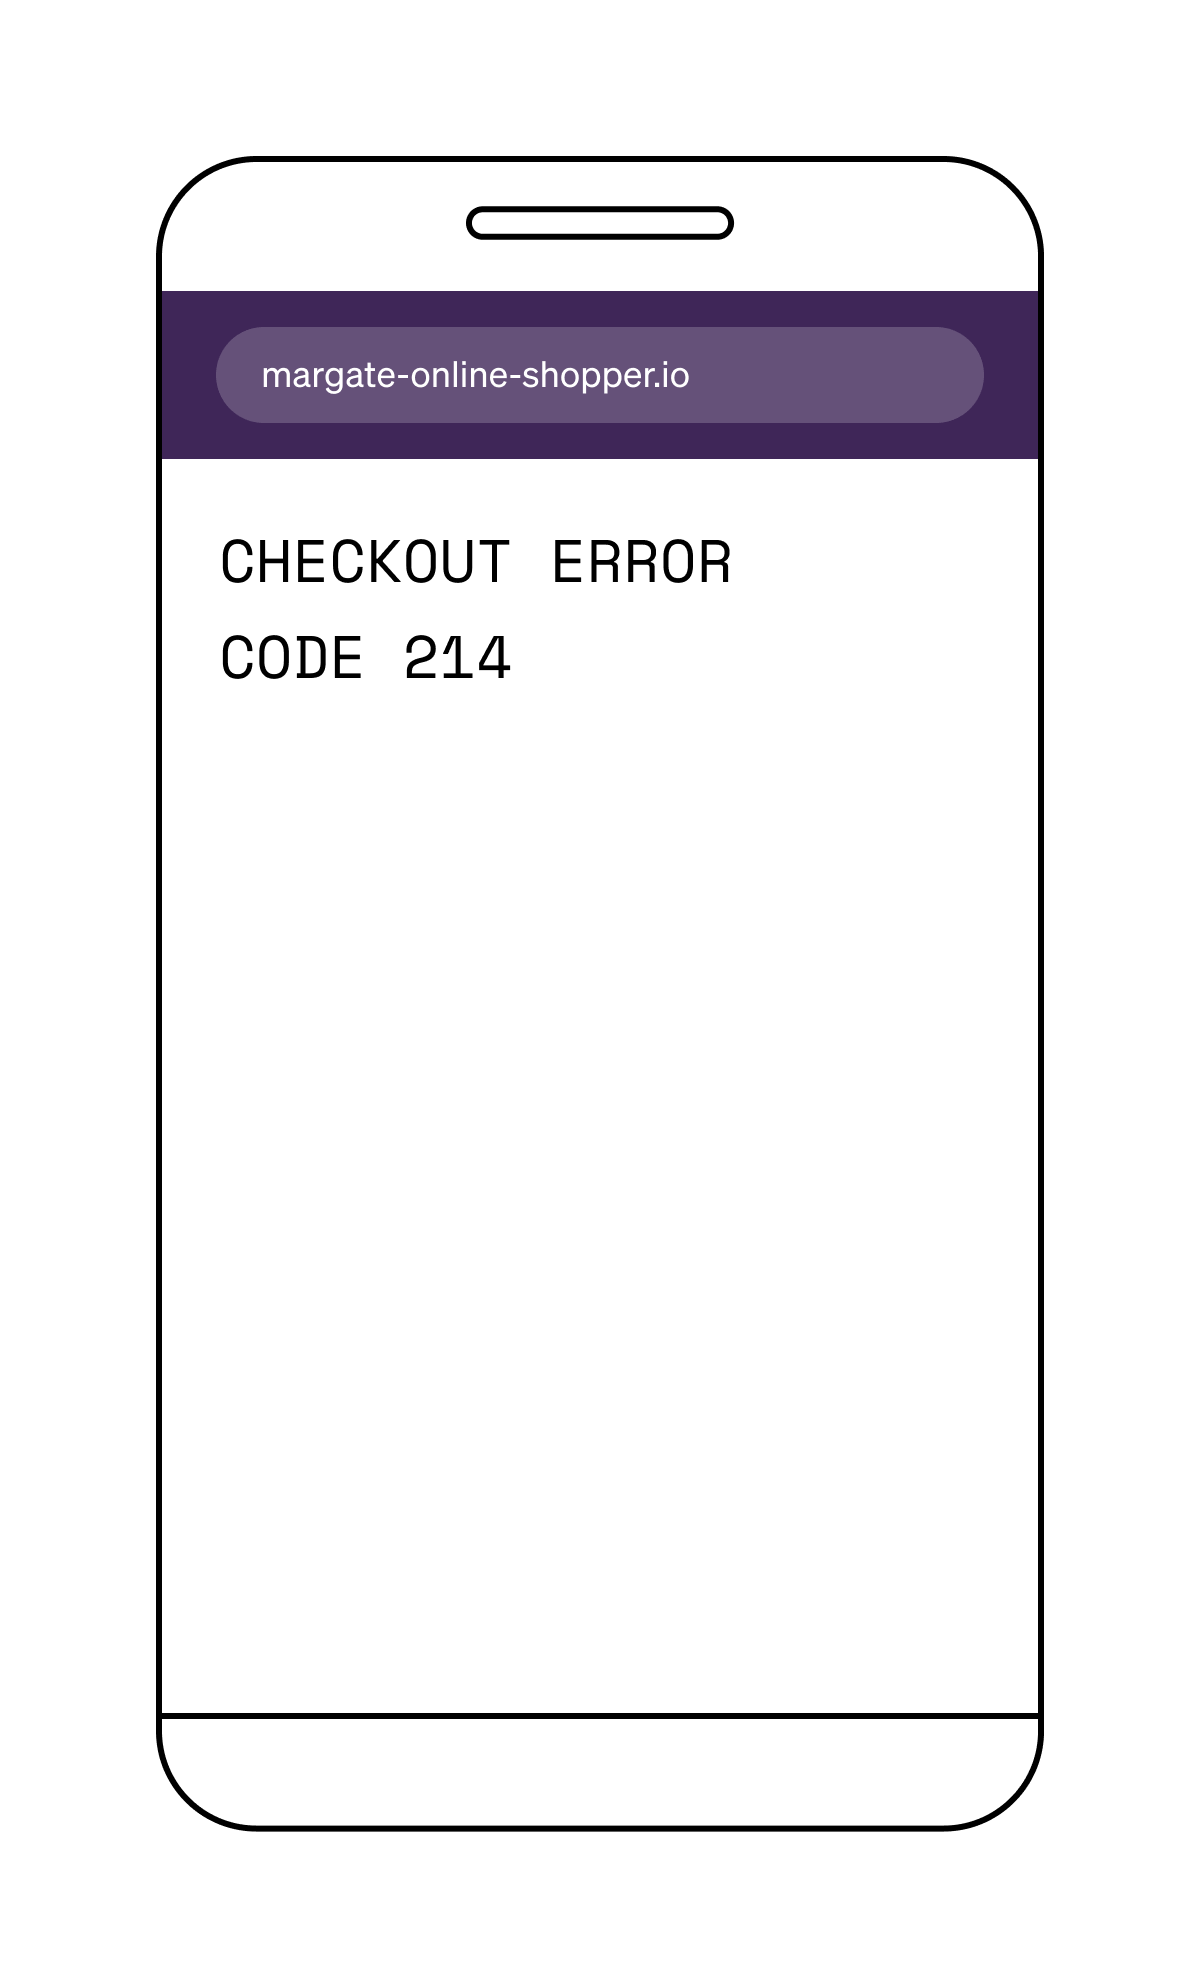 Illustration of system error message